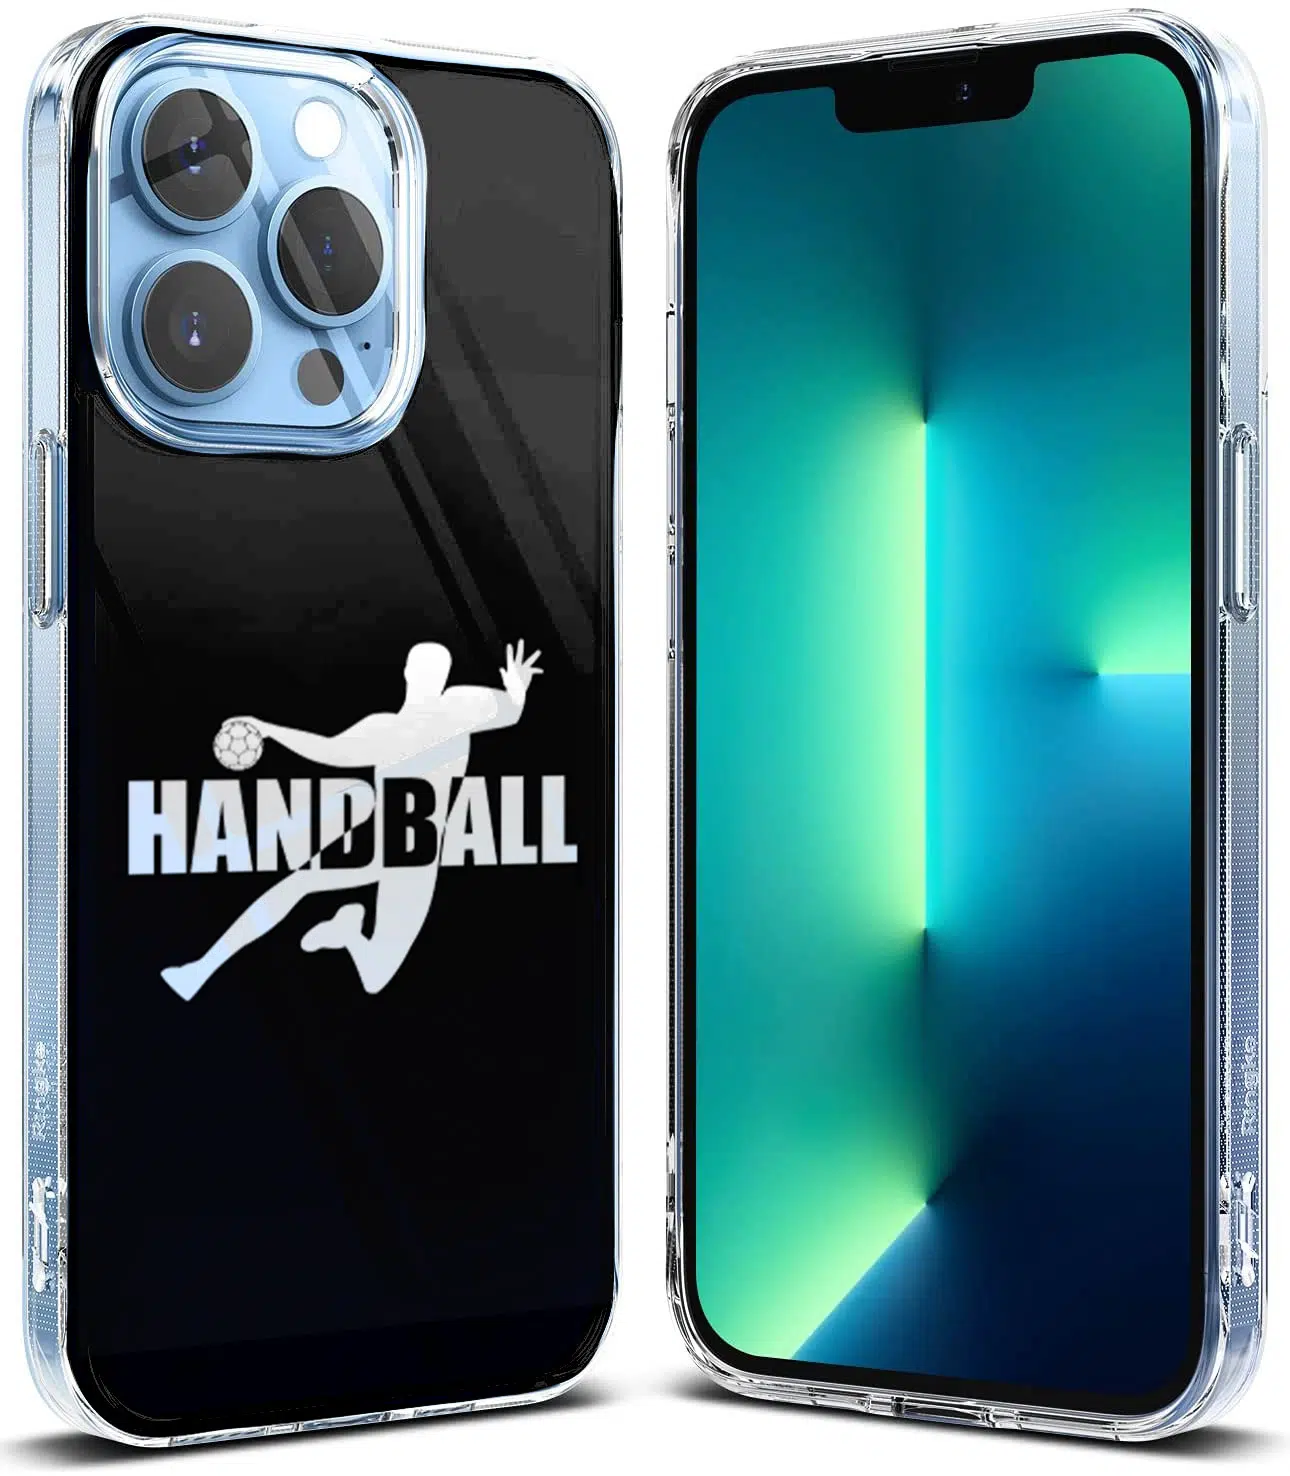 Coque jpeux pas j'ai handball Apple iPhone 5 5S SE silicone sport